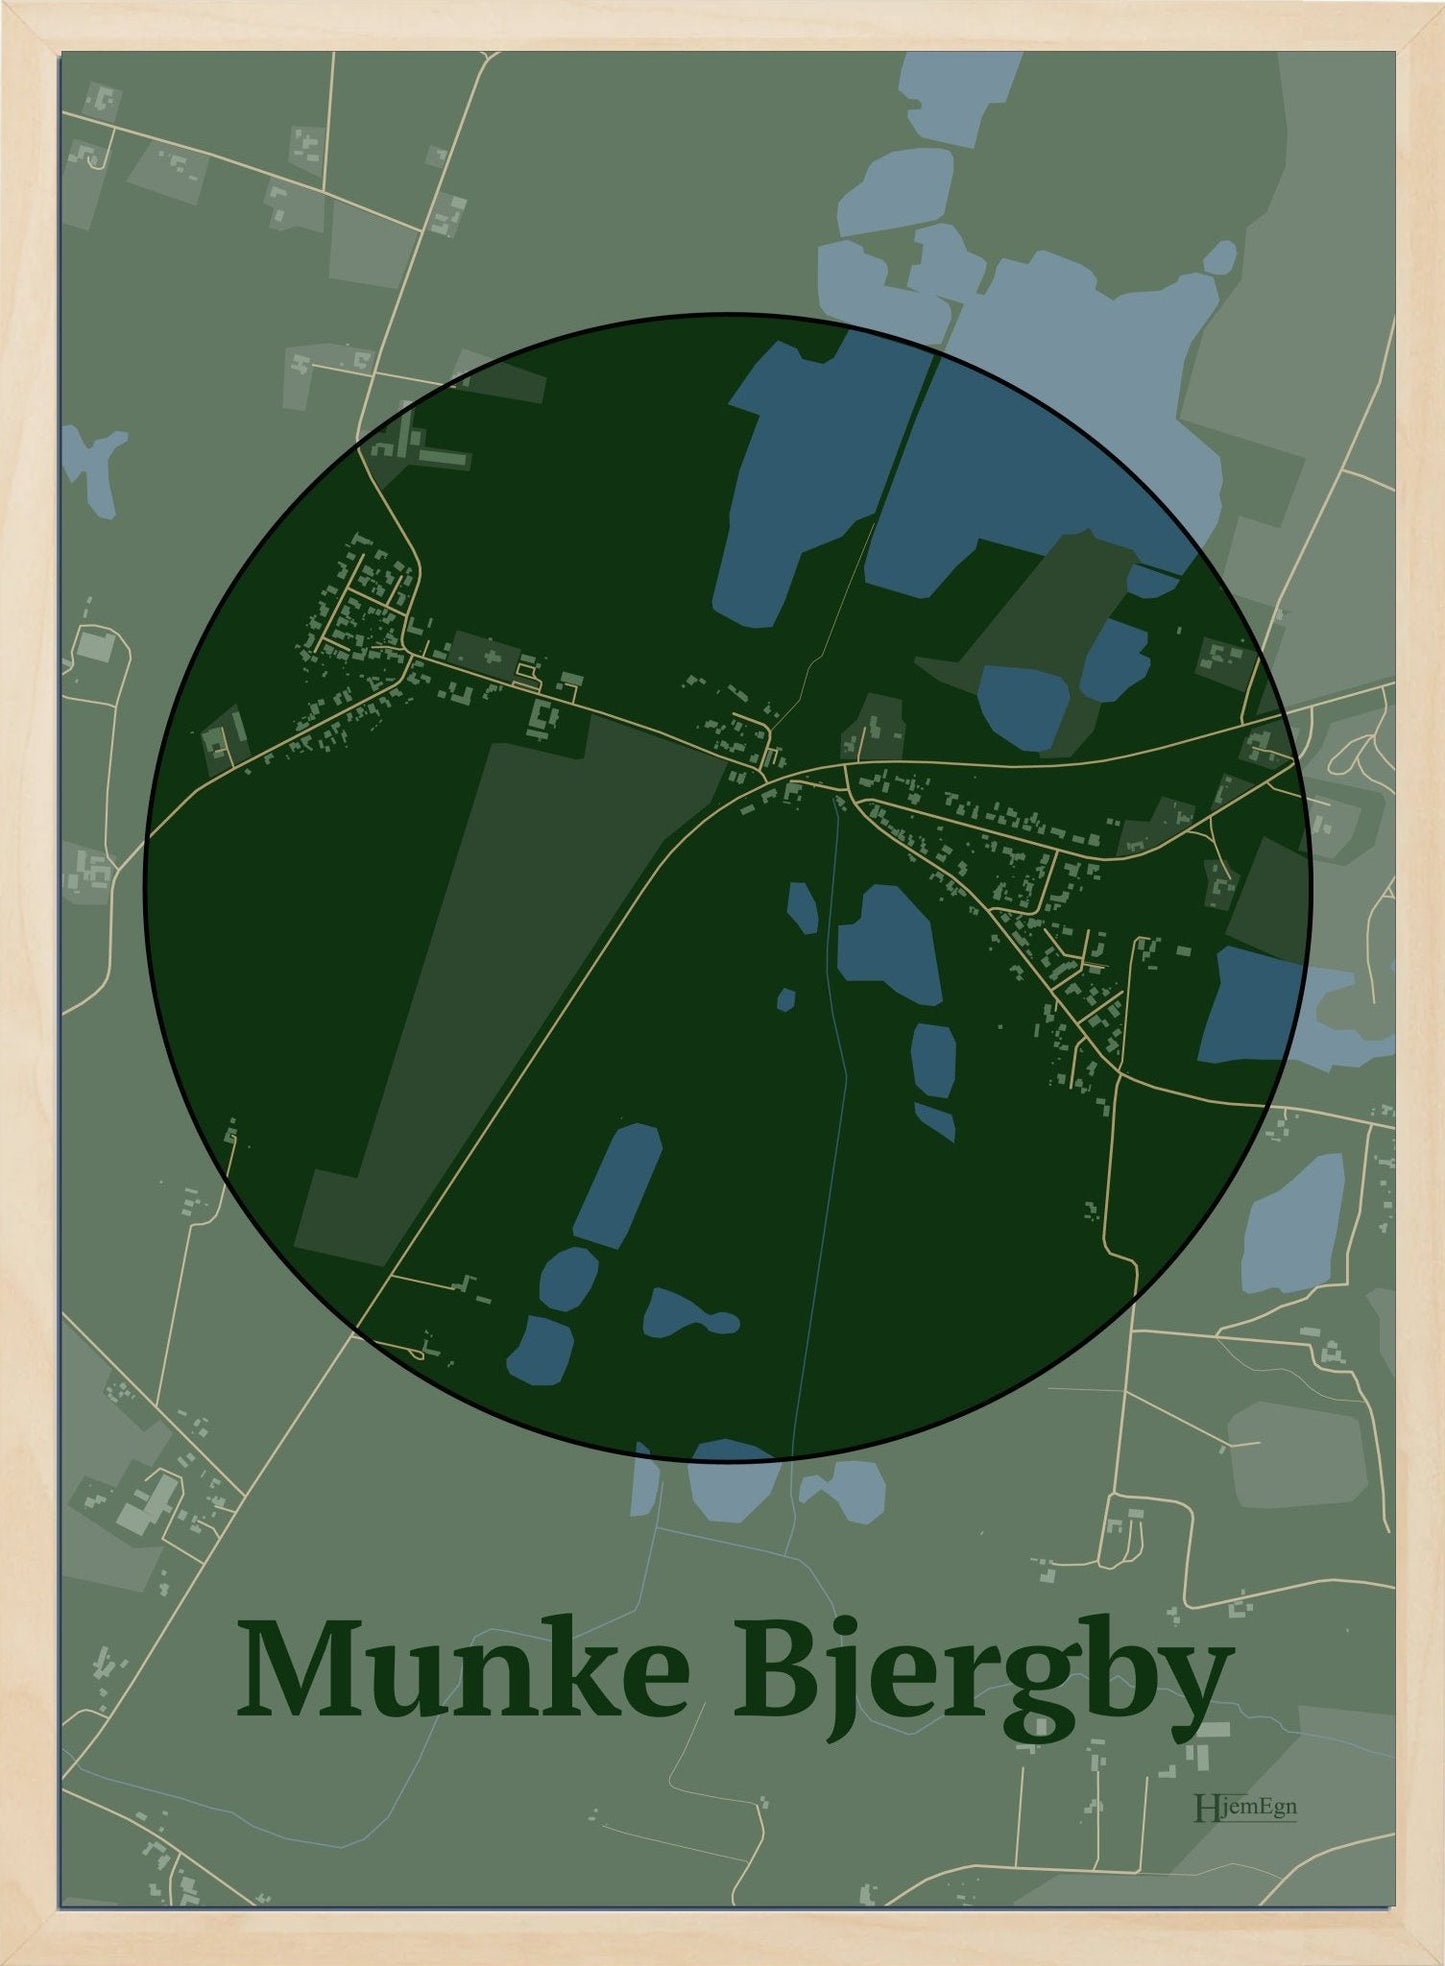 Munke Bjergby plakat i farve mørk grøn og HjemEgn.dk design centrum. Design bykort for Munke Bjergby